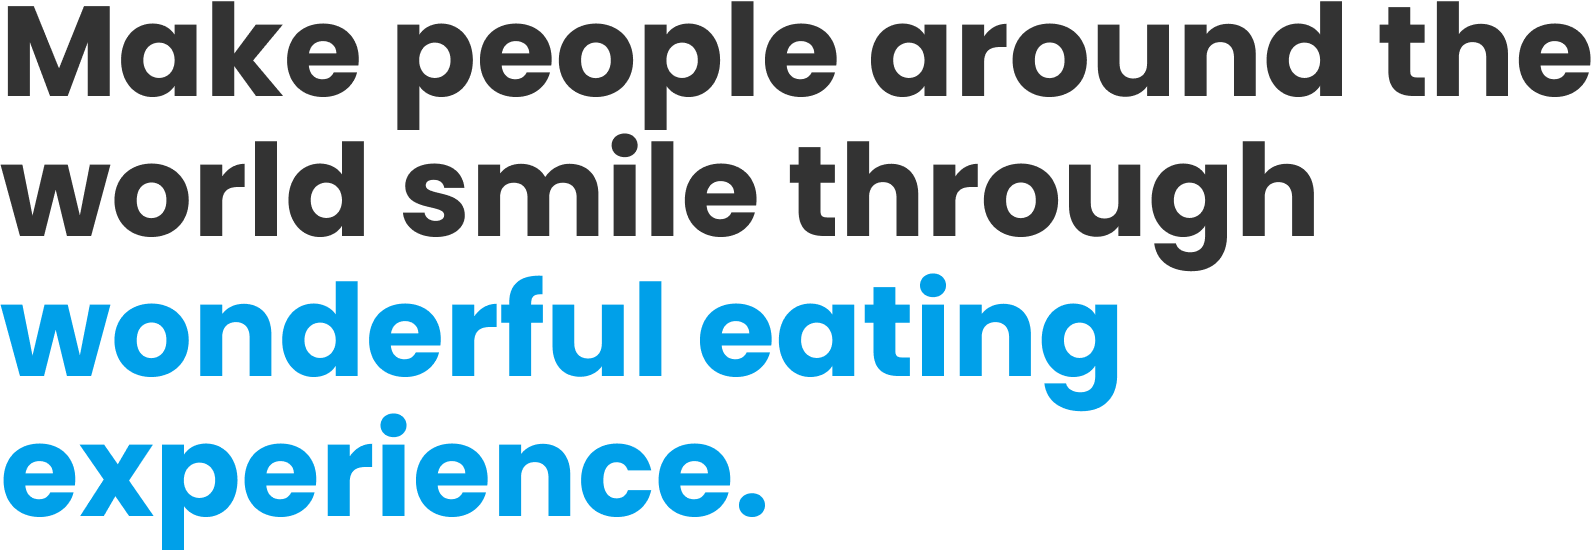 Make people around the world smile through wonderful eating experience.